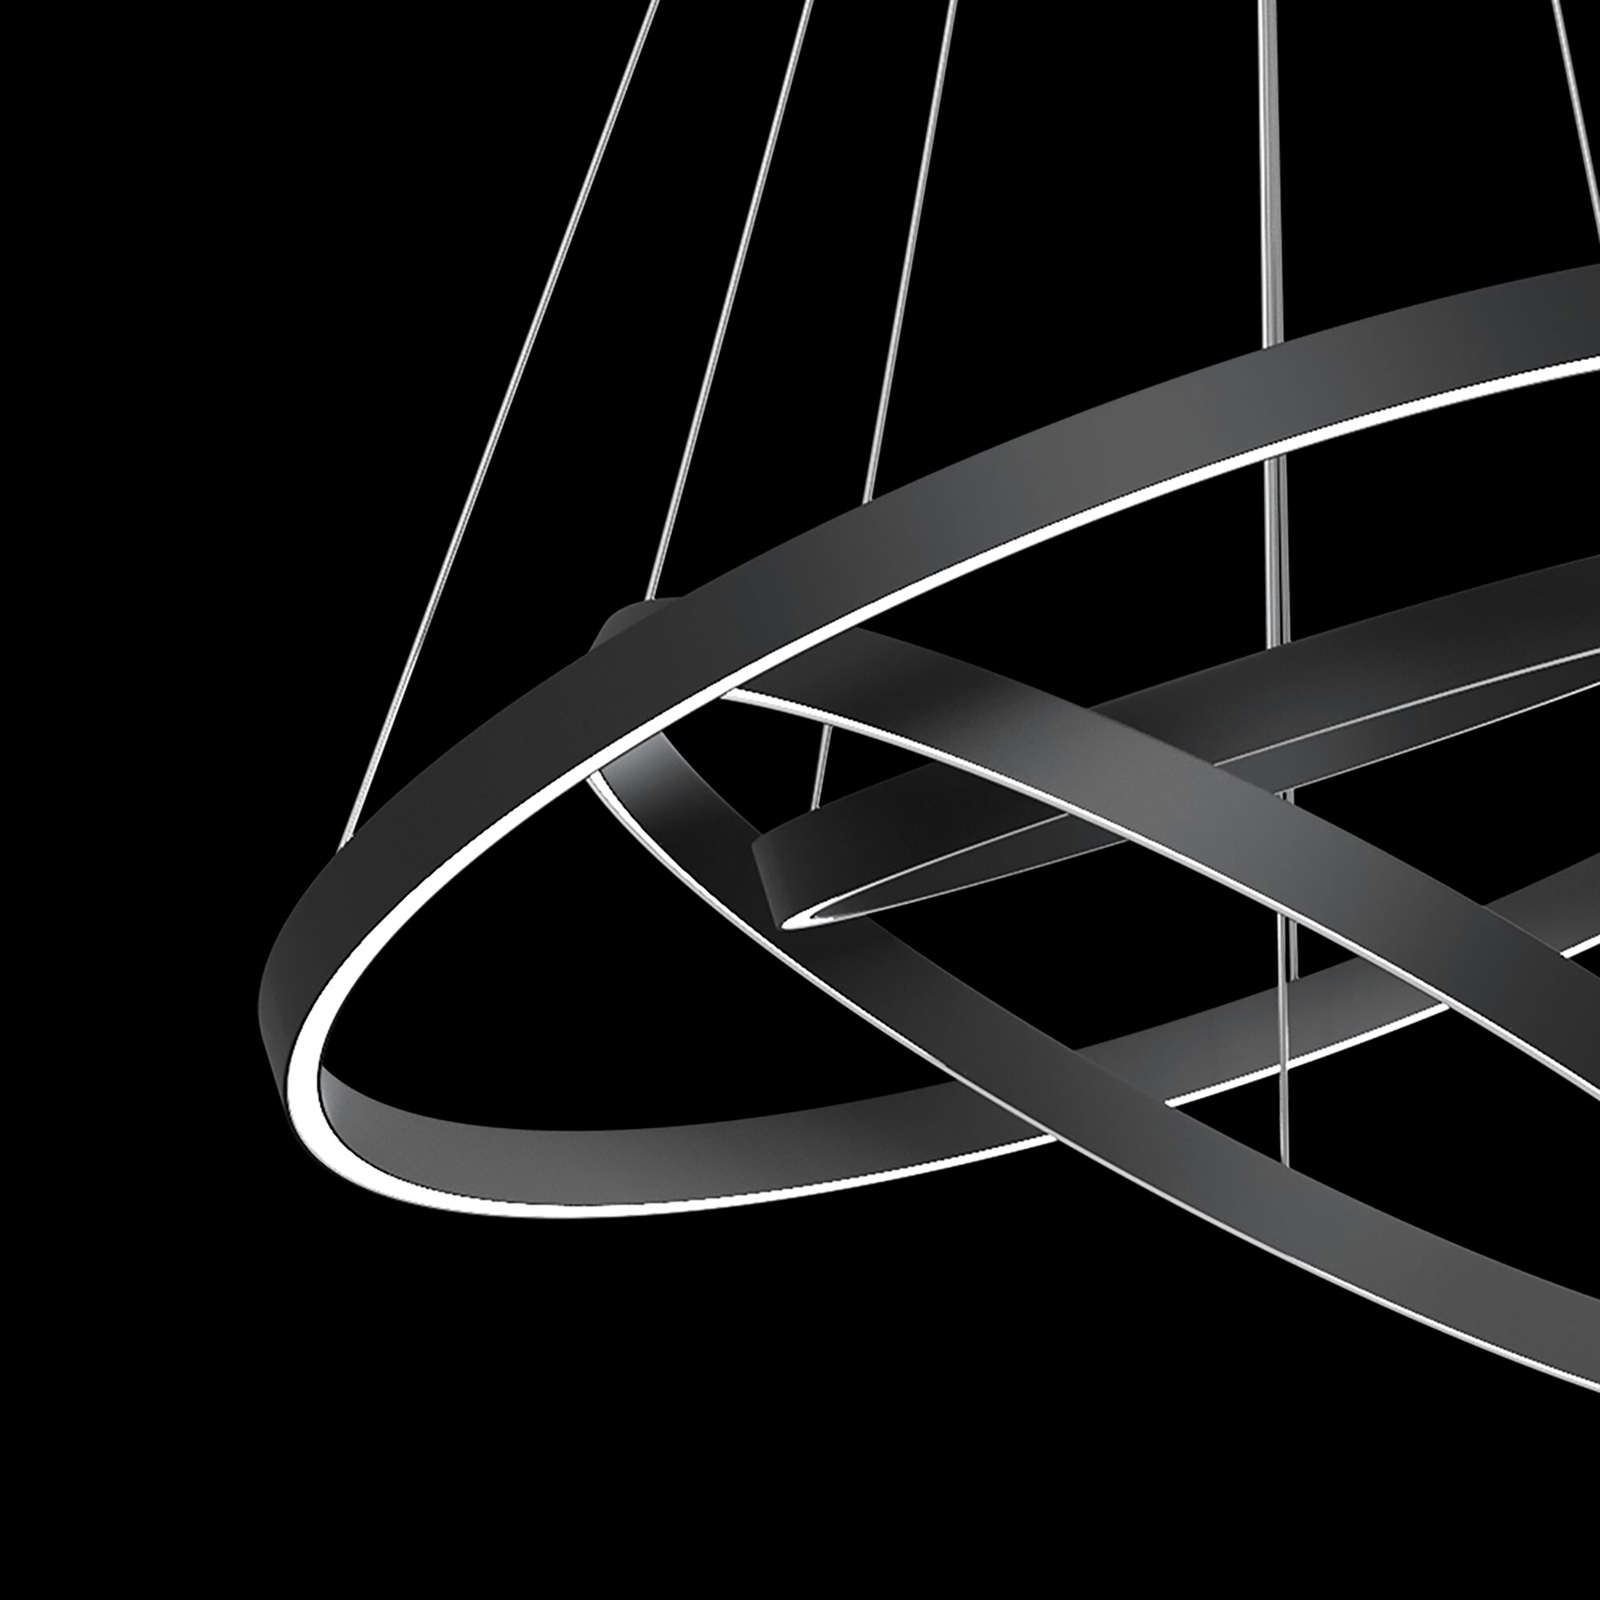 Maytoni Rim LED hanging light, 840, 3 rings, black